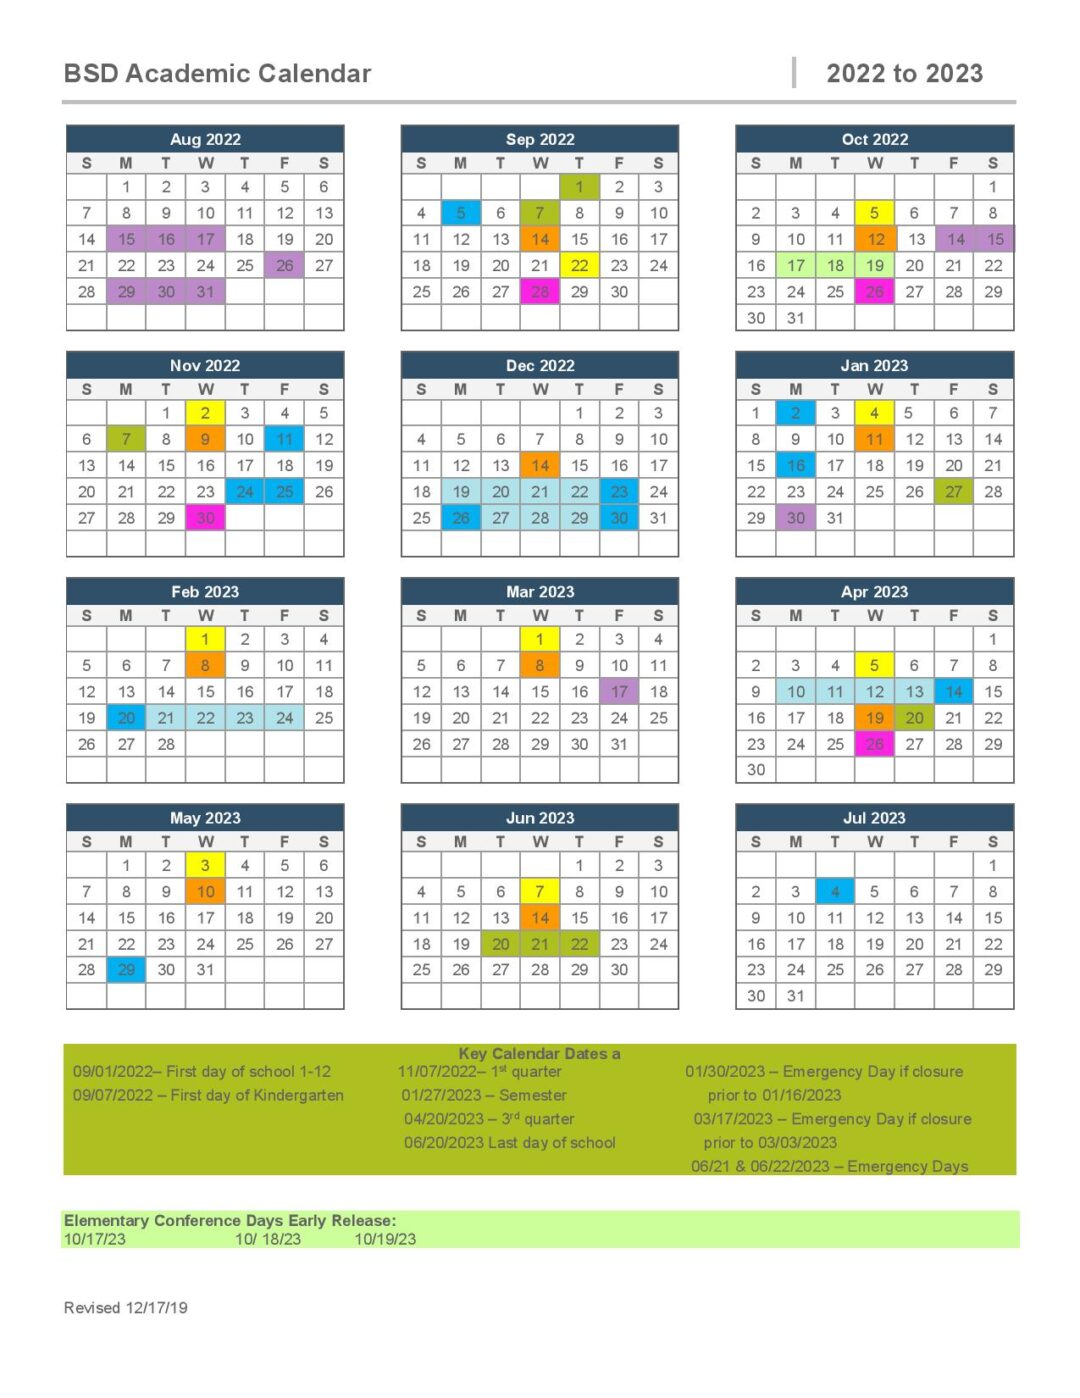 Bellevue School District Calendar 20222023 in PDF